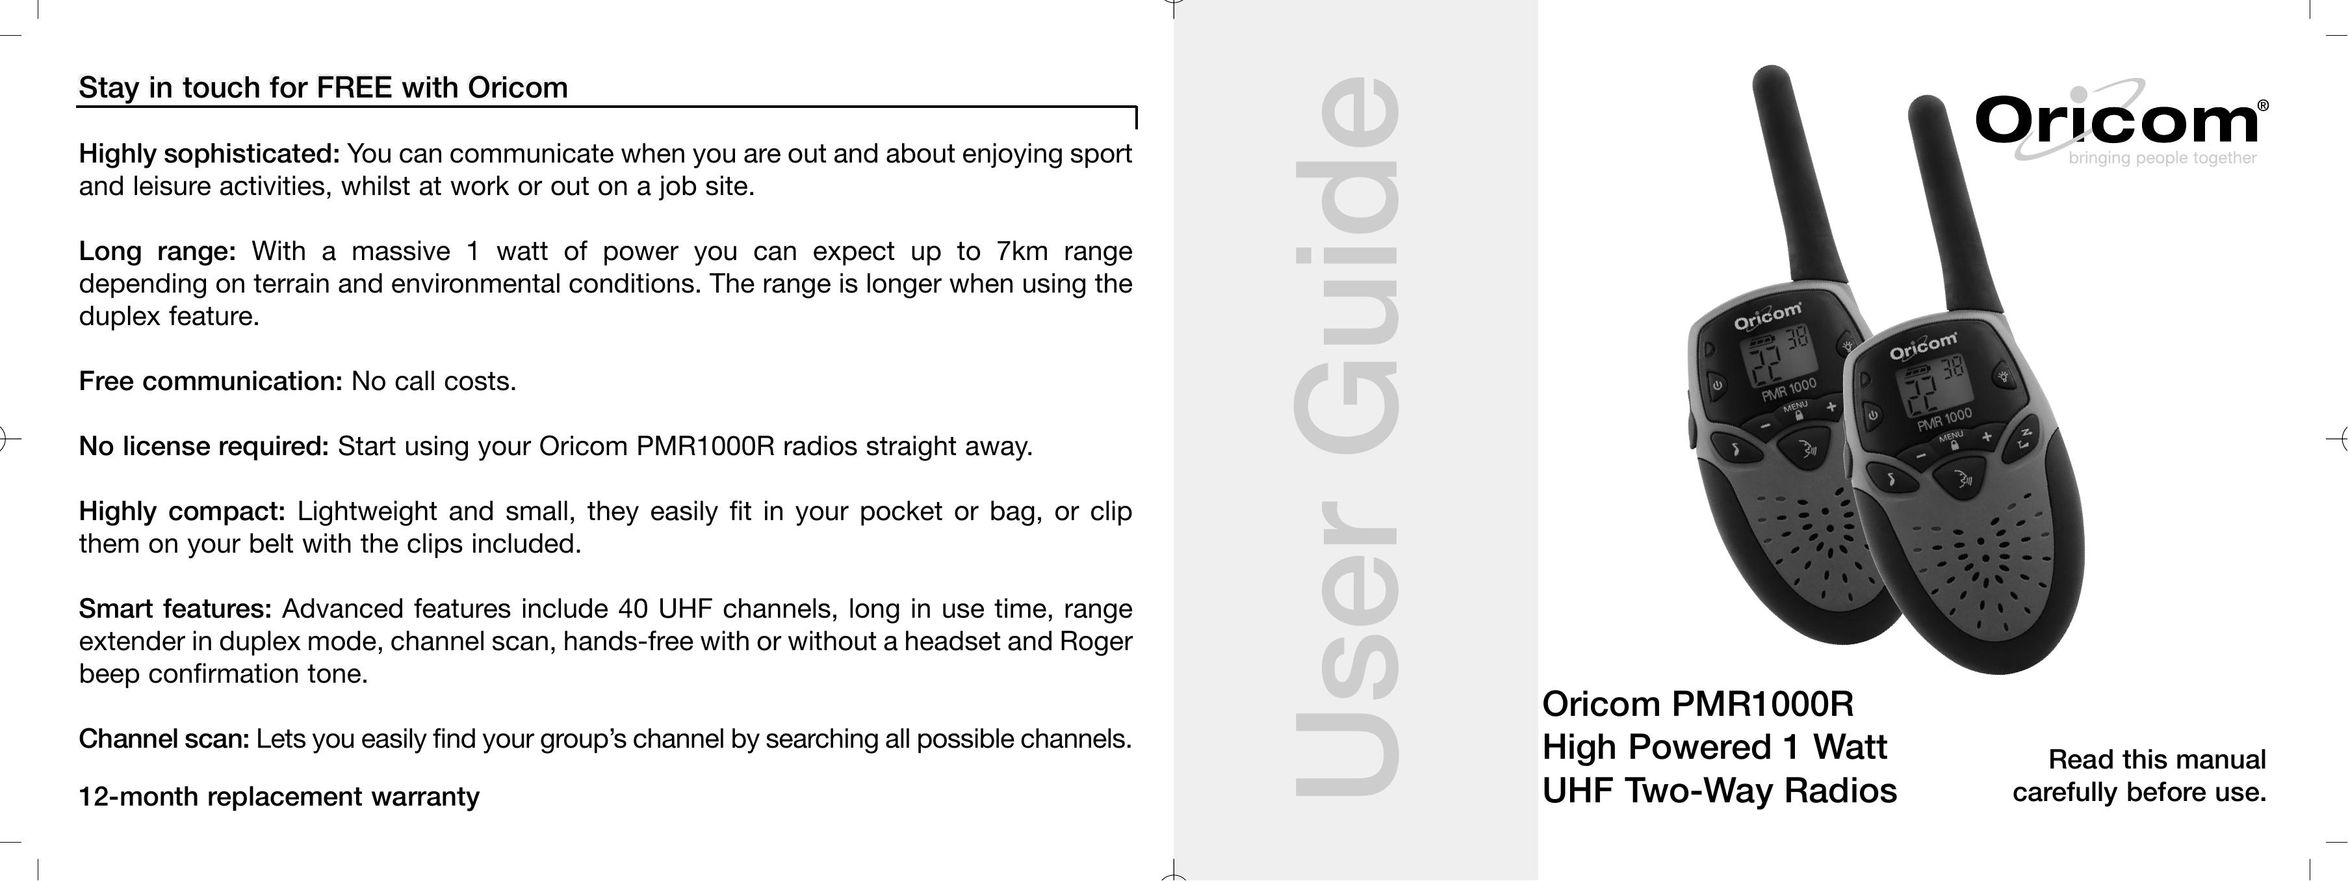 Oricom PMR1000R Cell Phone User Manual